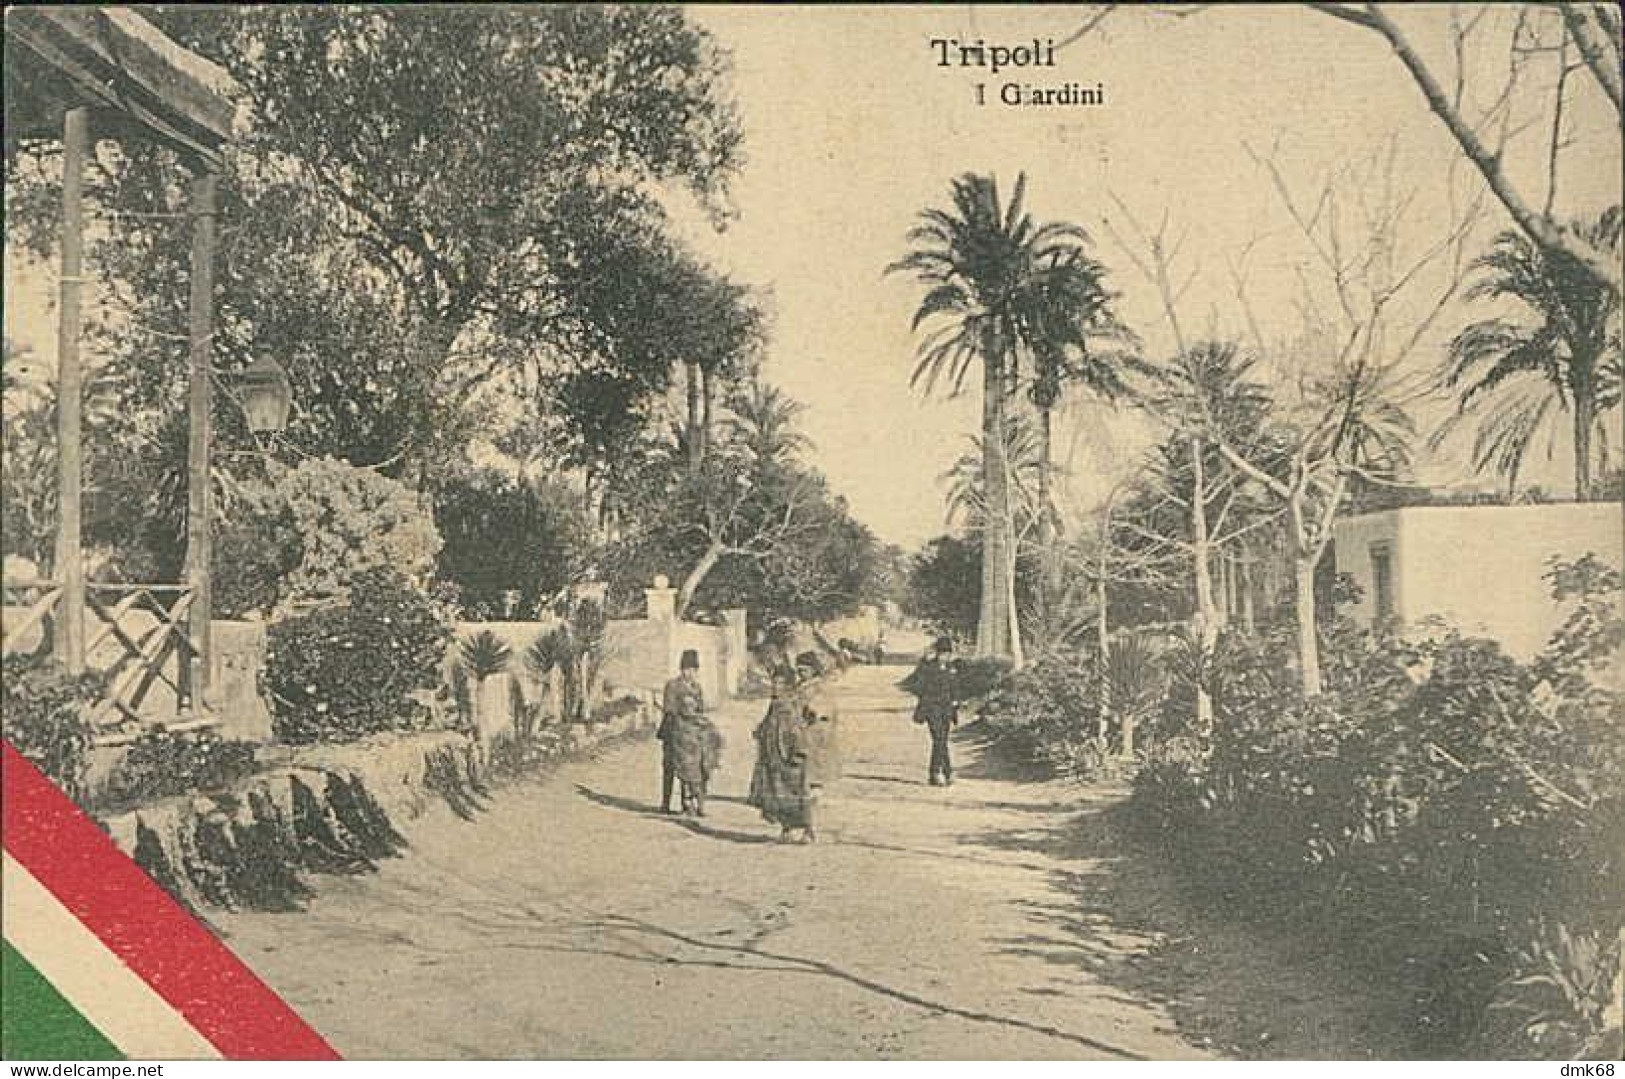 LIBIA / LIBYA - TRIPOLI - I GIARDINI - EDIZIONE RAGOZINO - SPEDITA 1913 (12464) - Libya